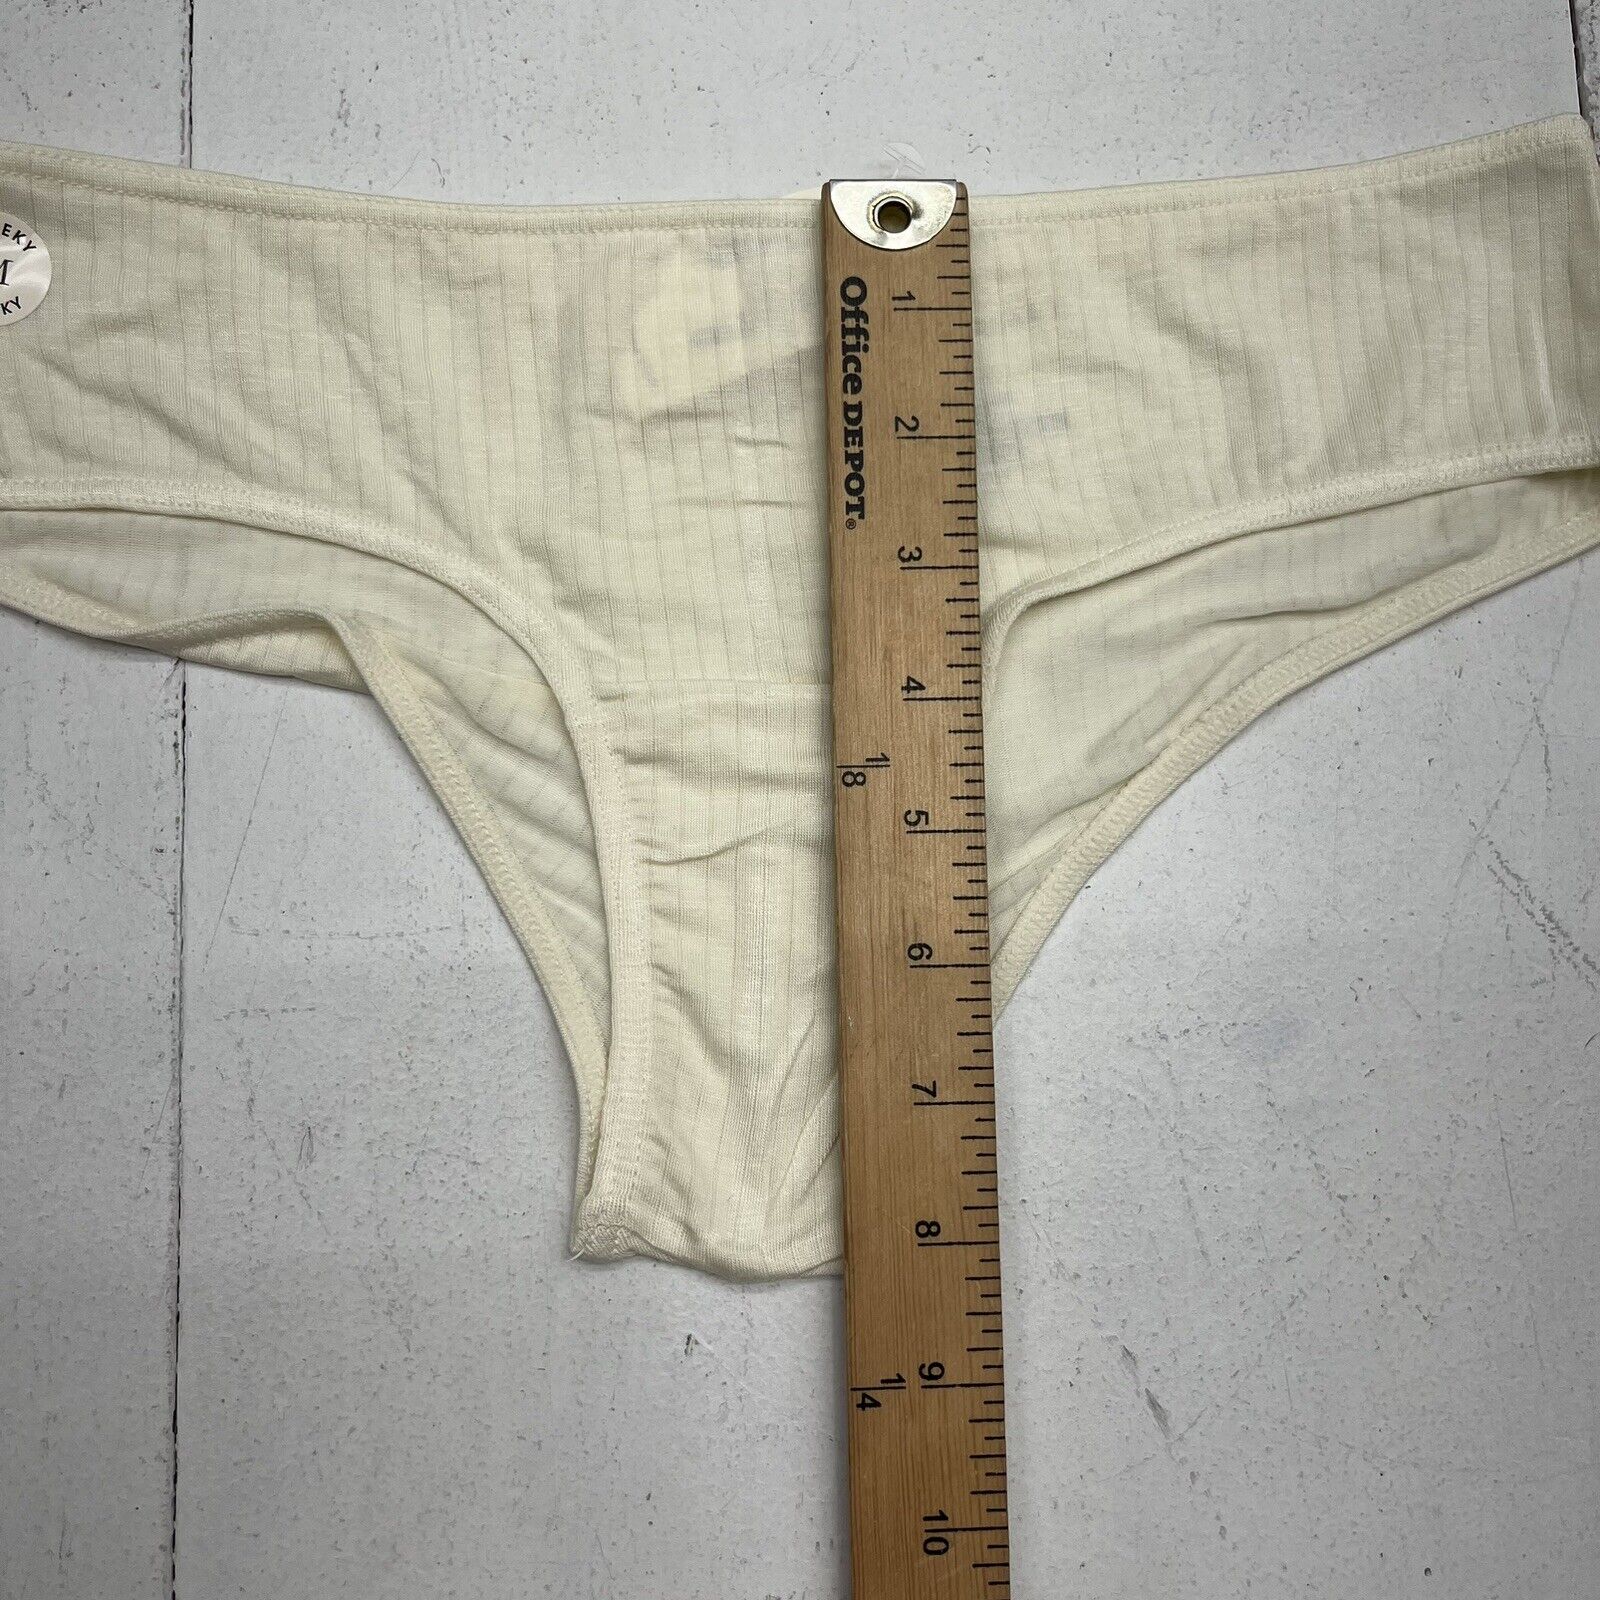 Aeropostale Mauve Cheeky Underwear Women's Size Medium NEW